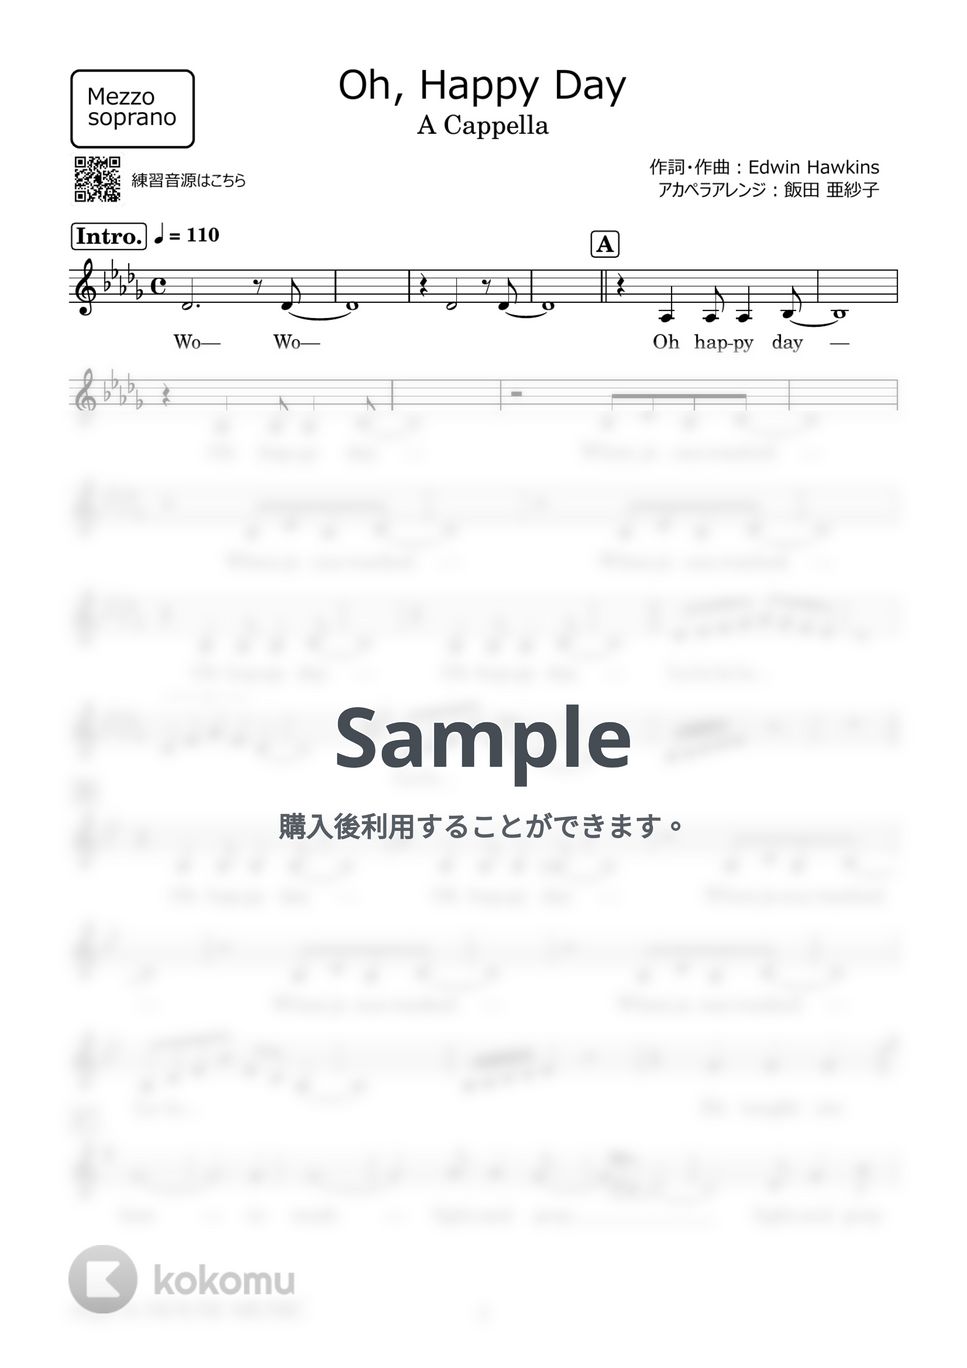 Oh, Happy Day (アカペラ楽譜♪MezzoSopranoパート譜) by 飯田 亜紗子